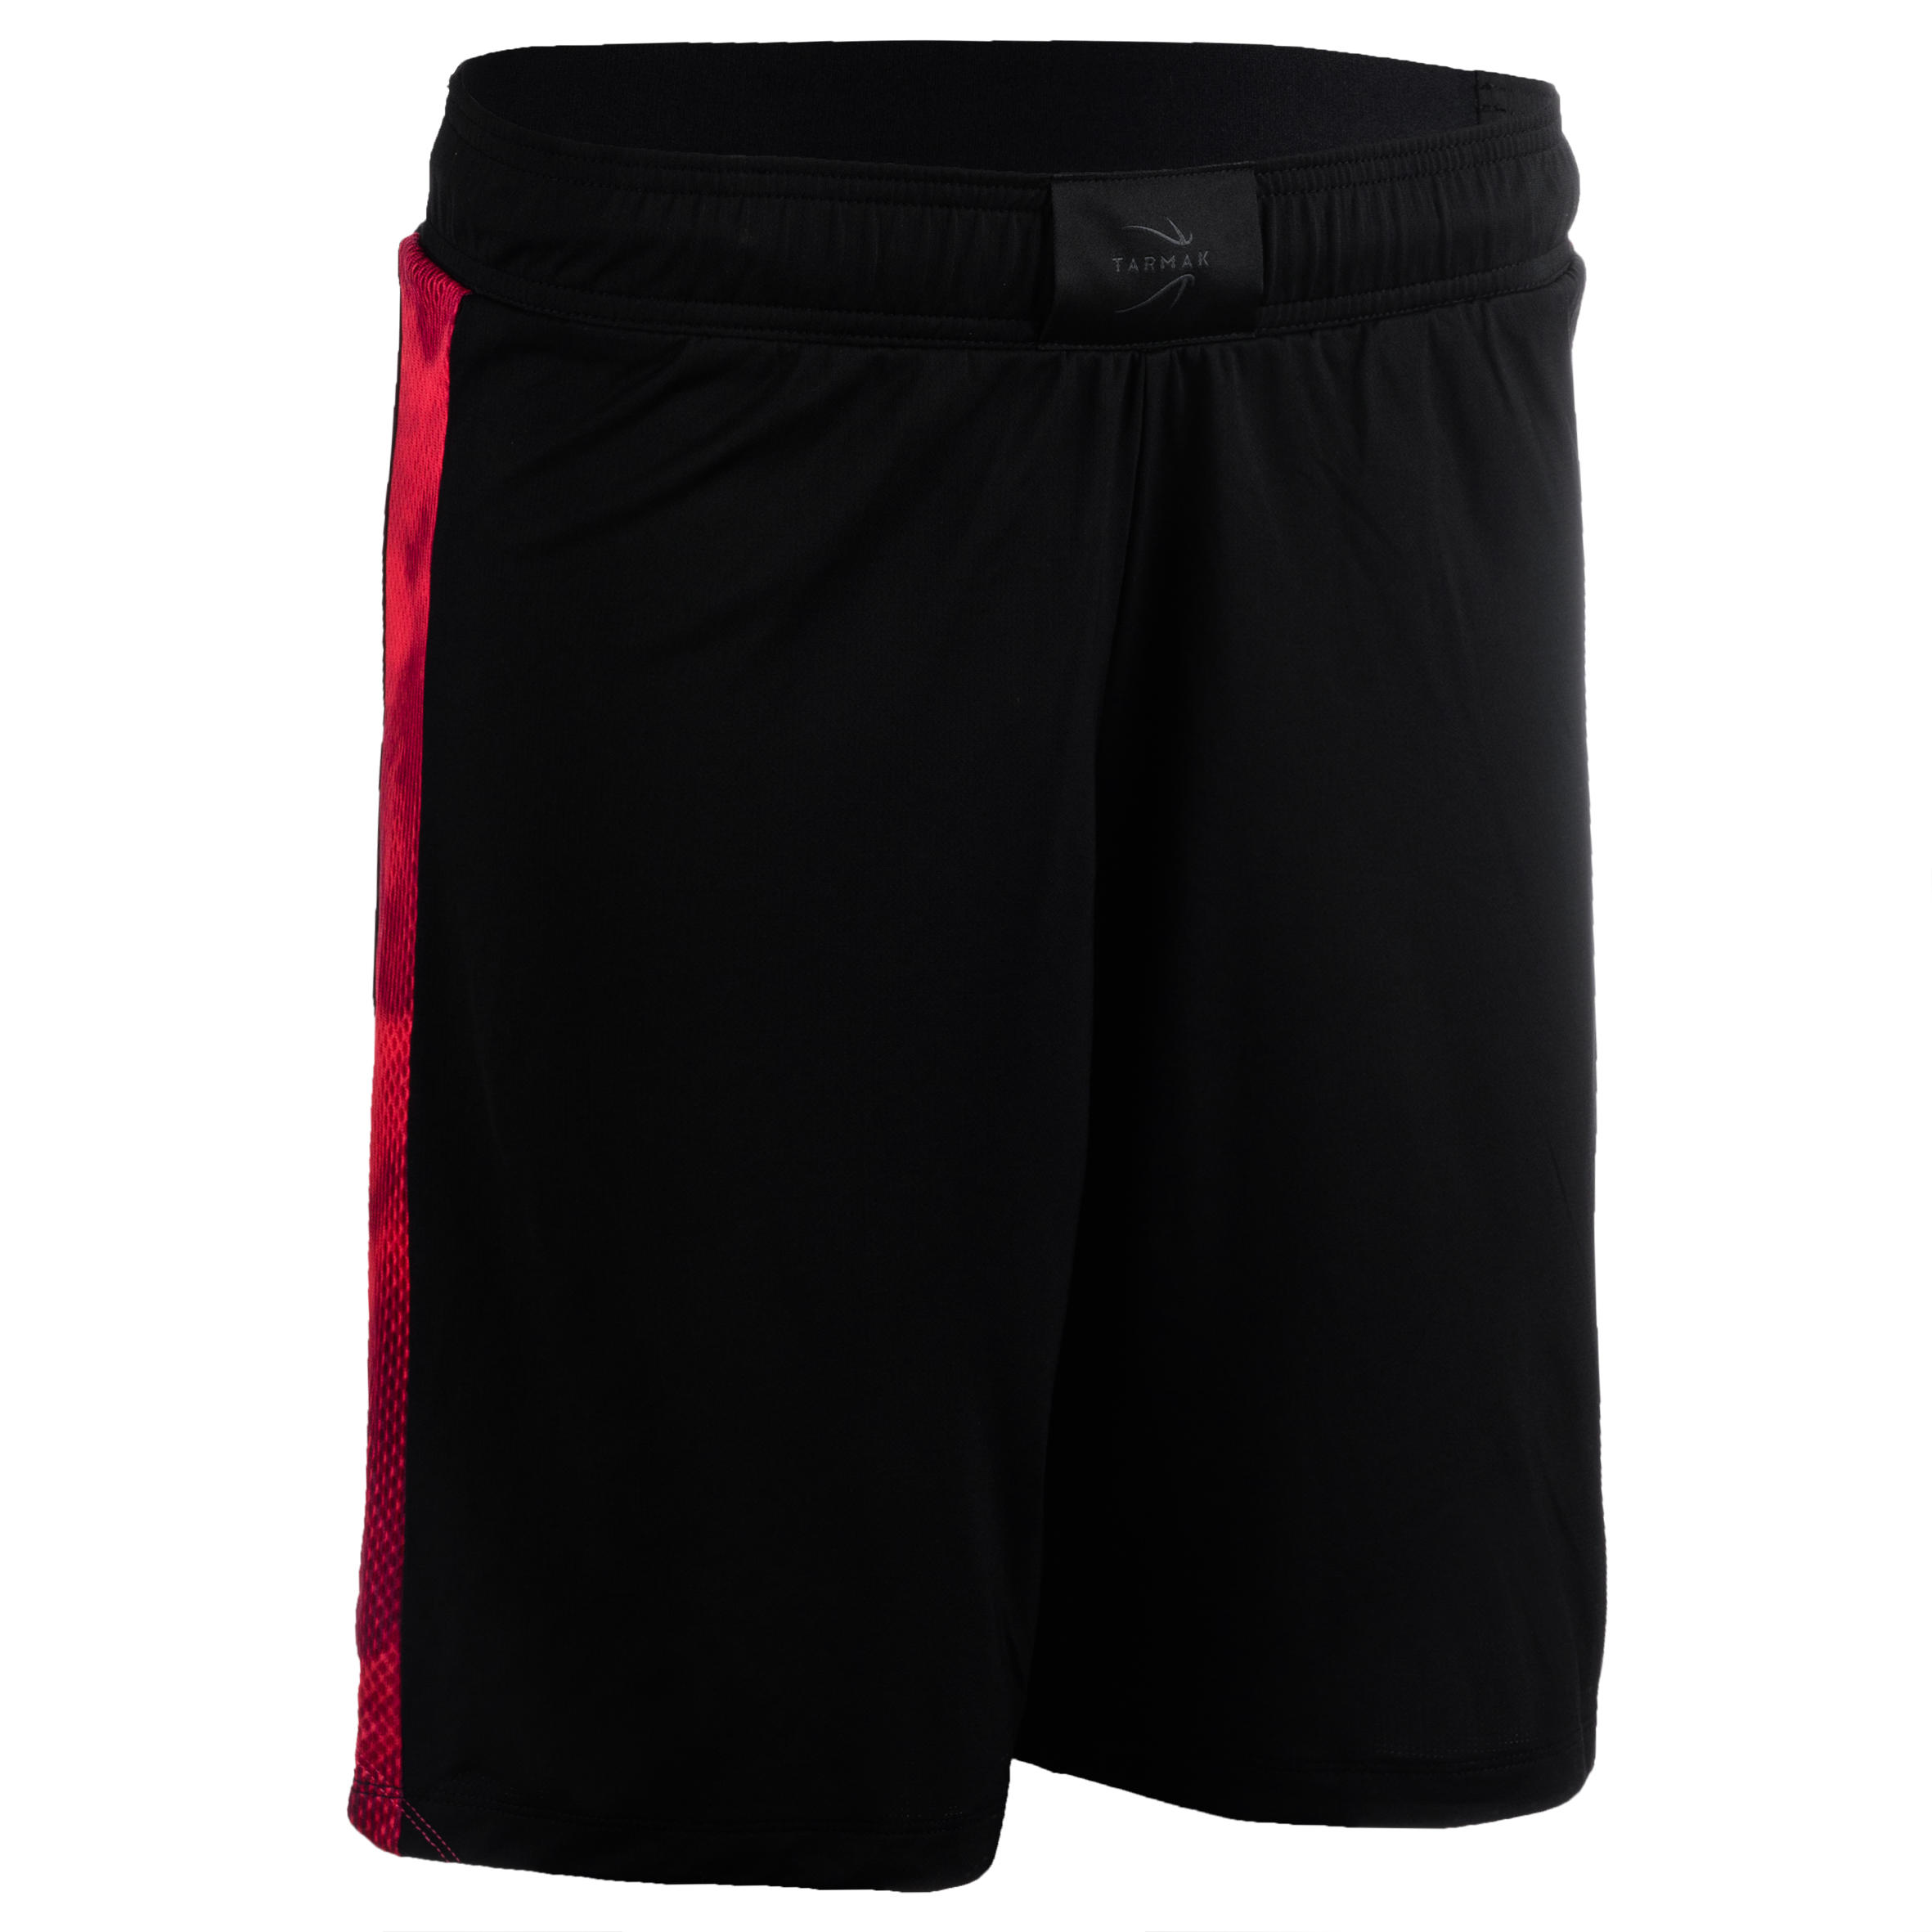 TARMAK SH500 Women's Basketball Shorts - Black/Pink